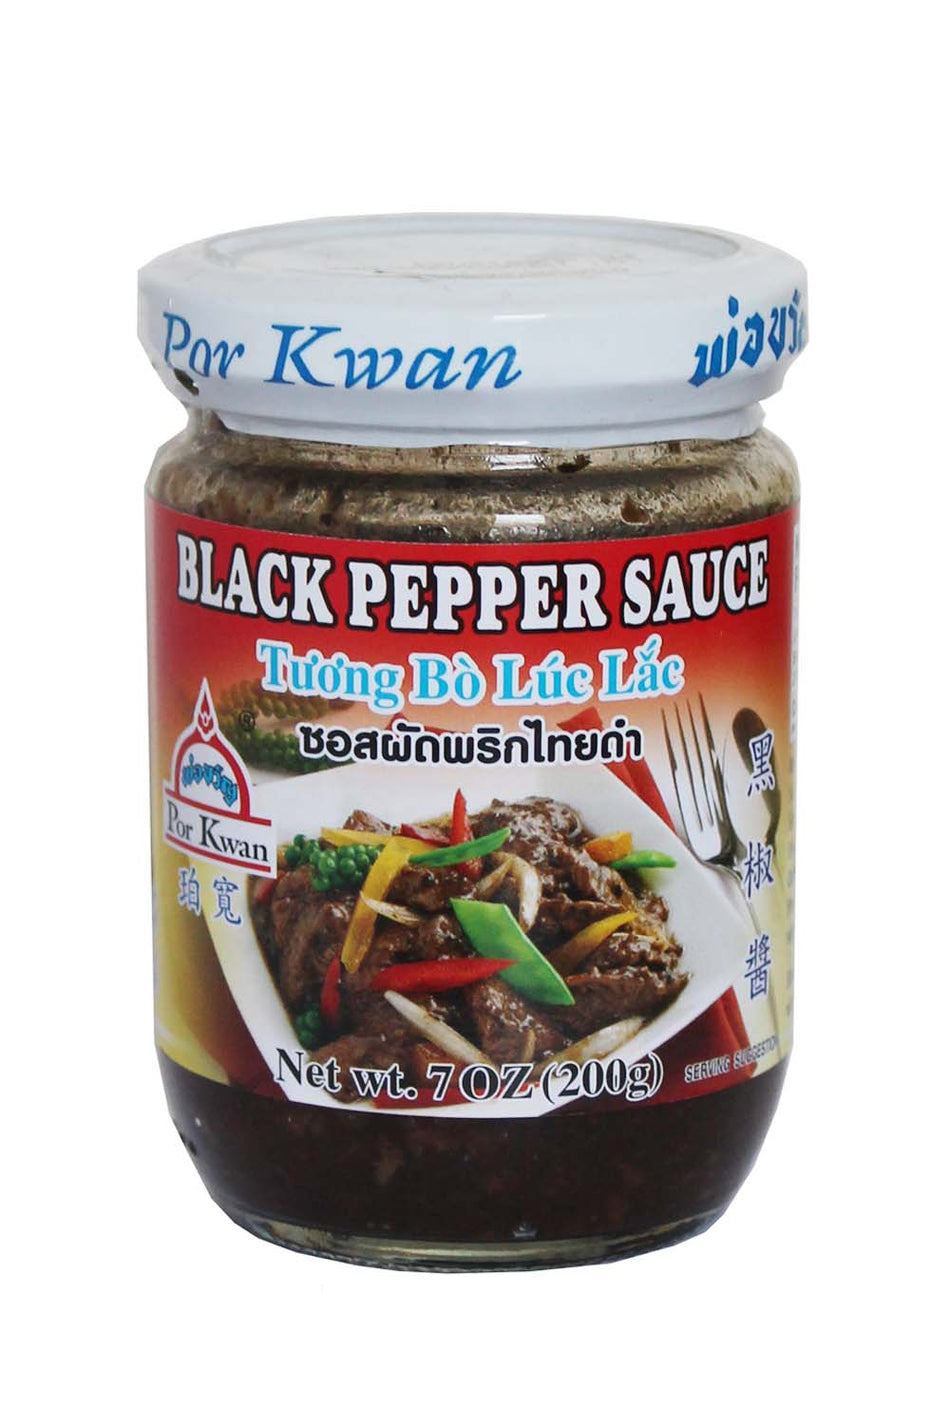 Por Kwan Black Pepper Sauce